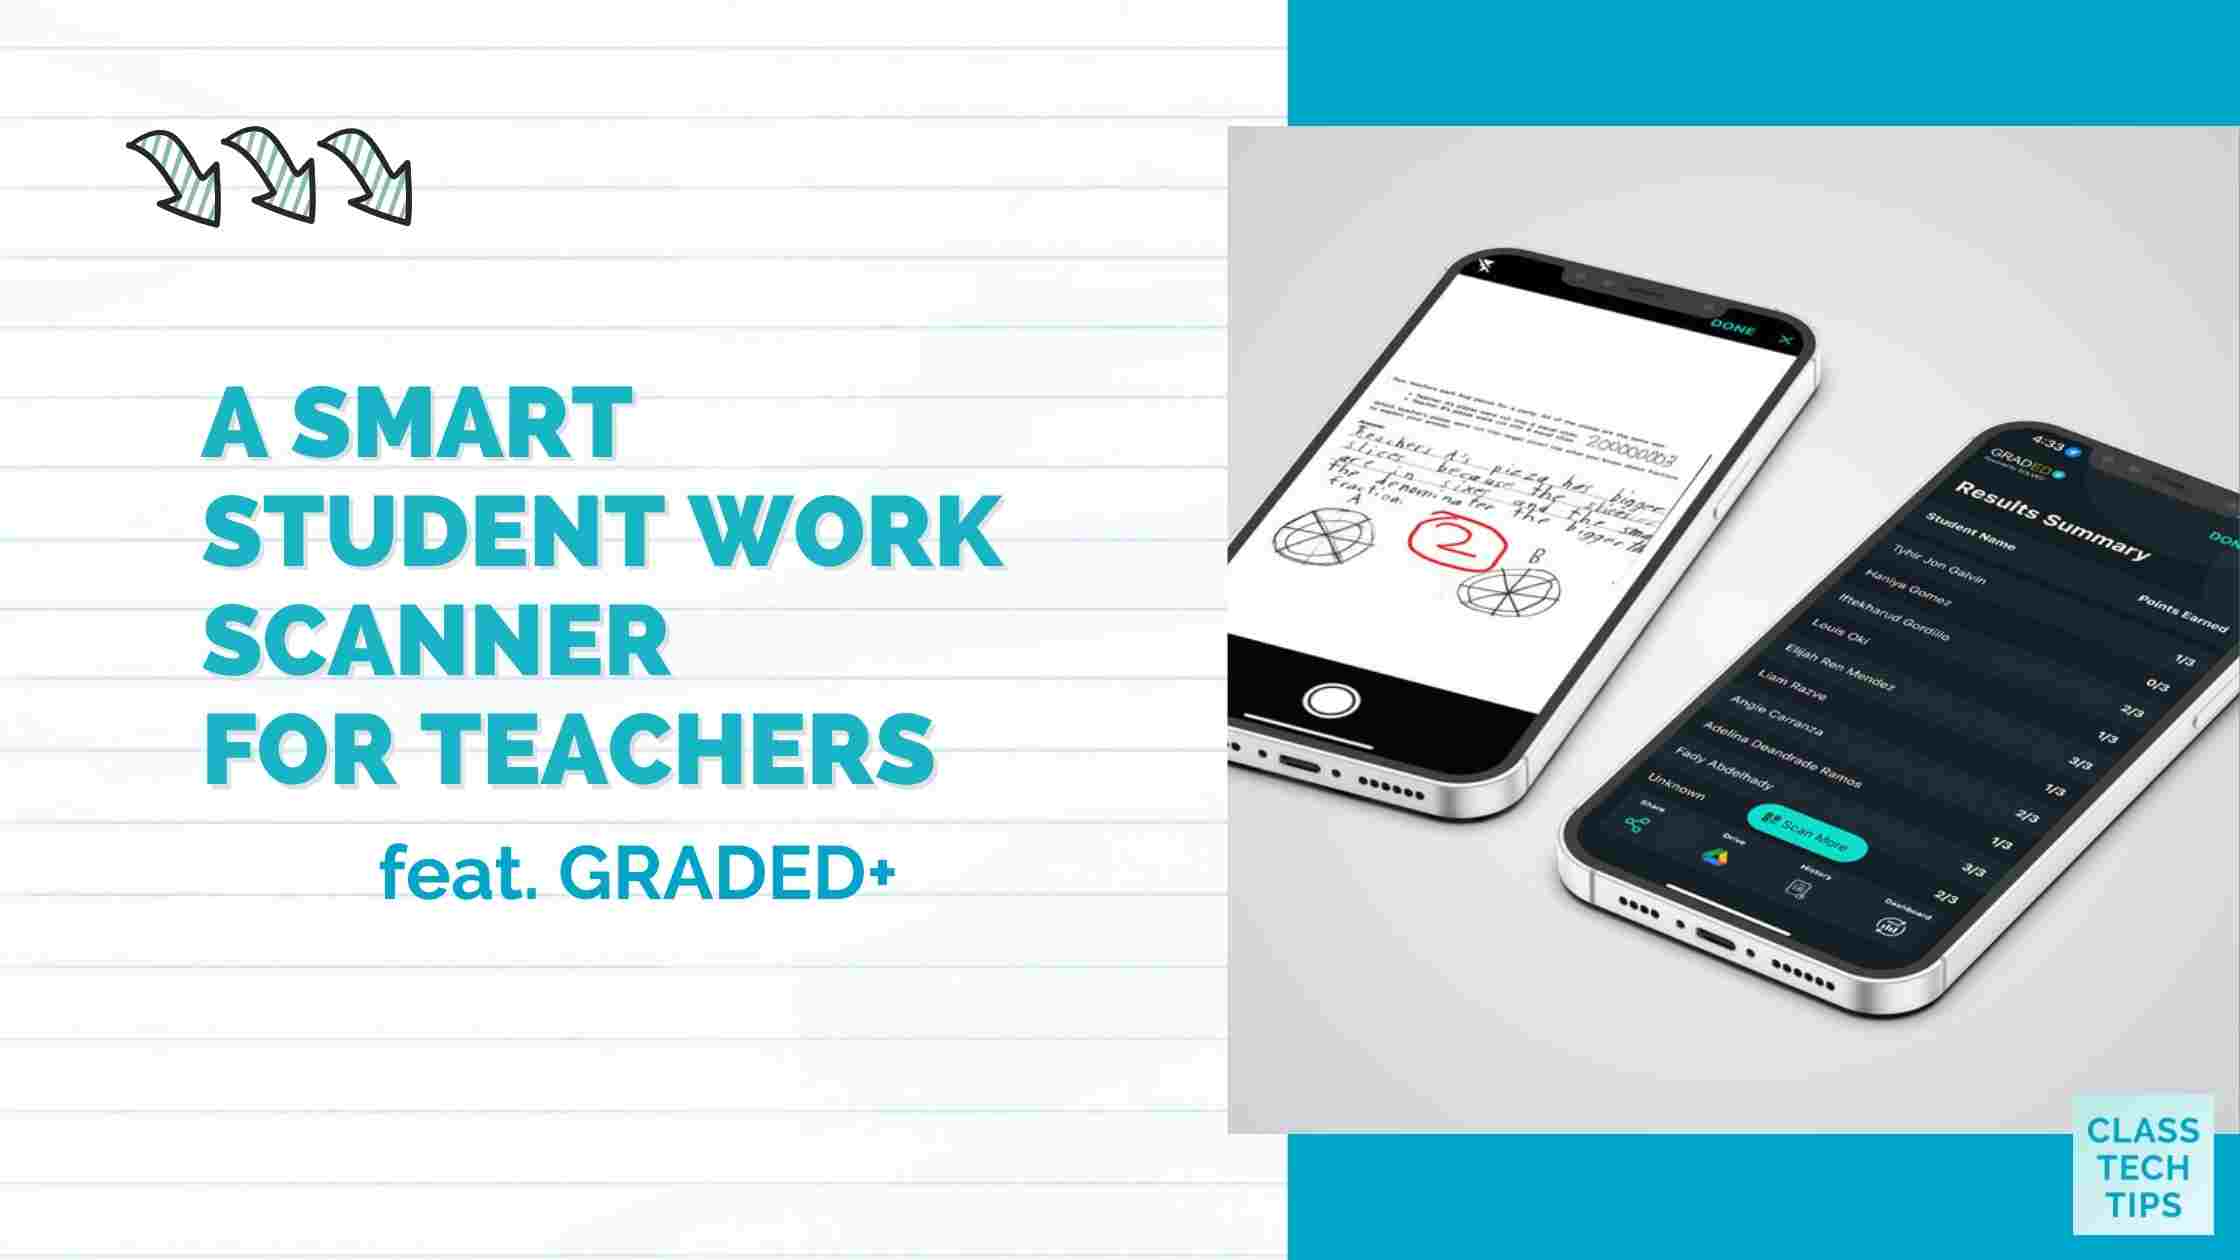 A Smart Student Work Scanner for Teachers